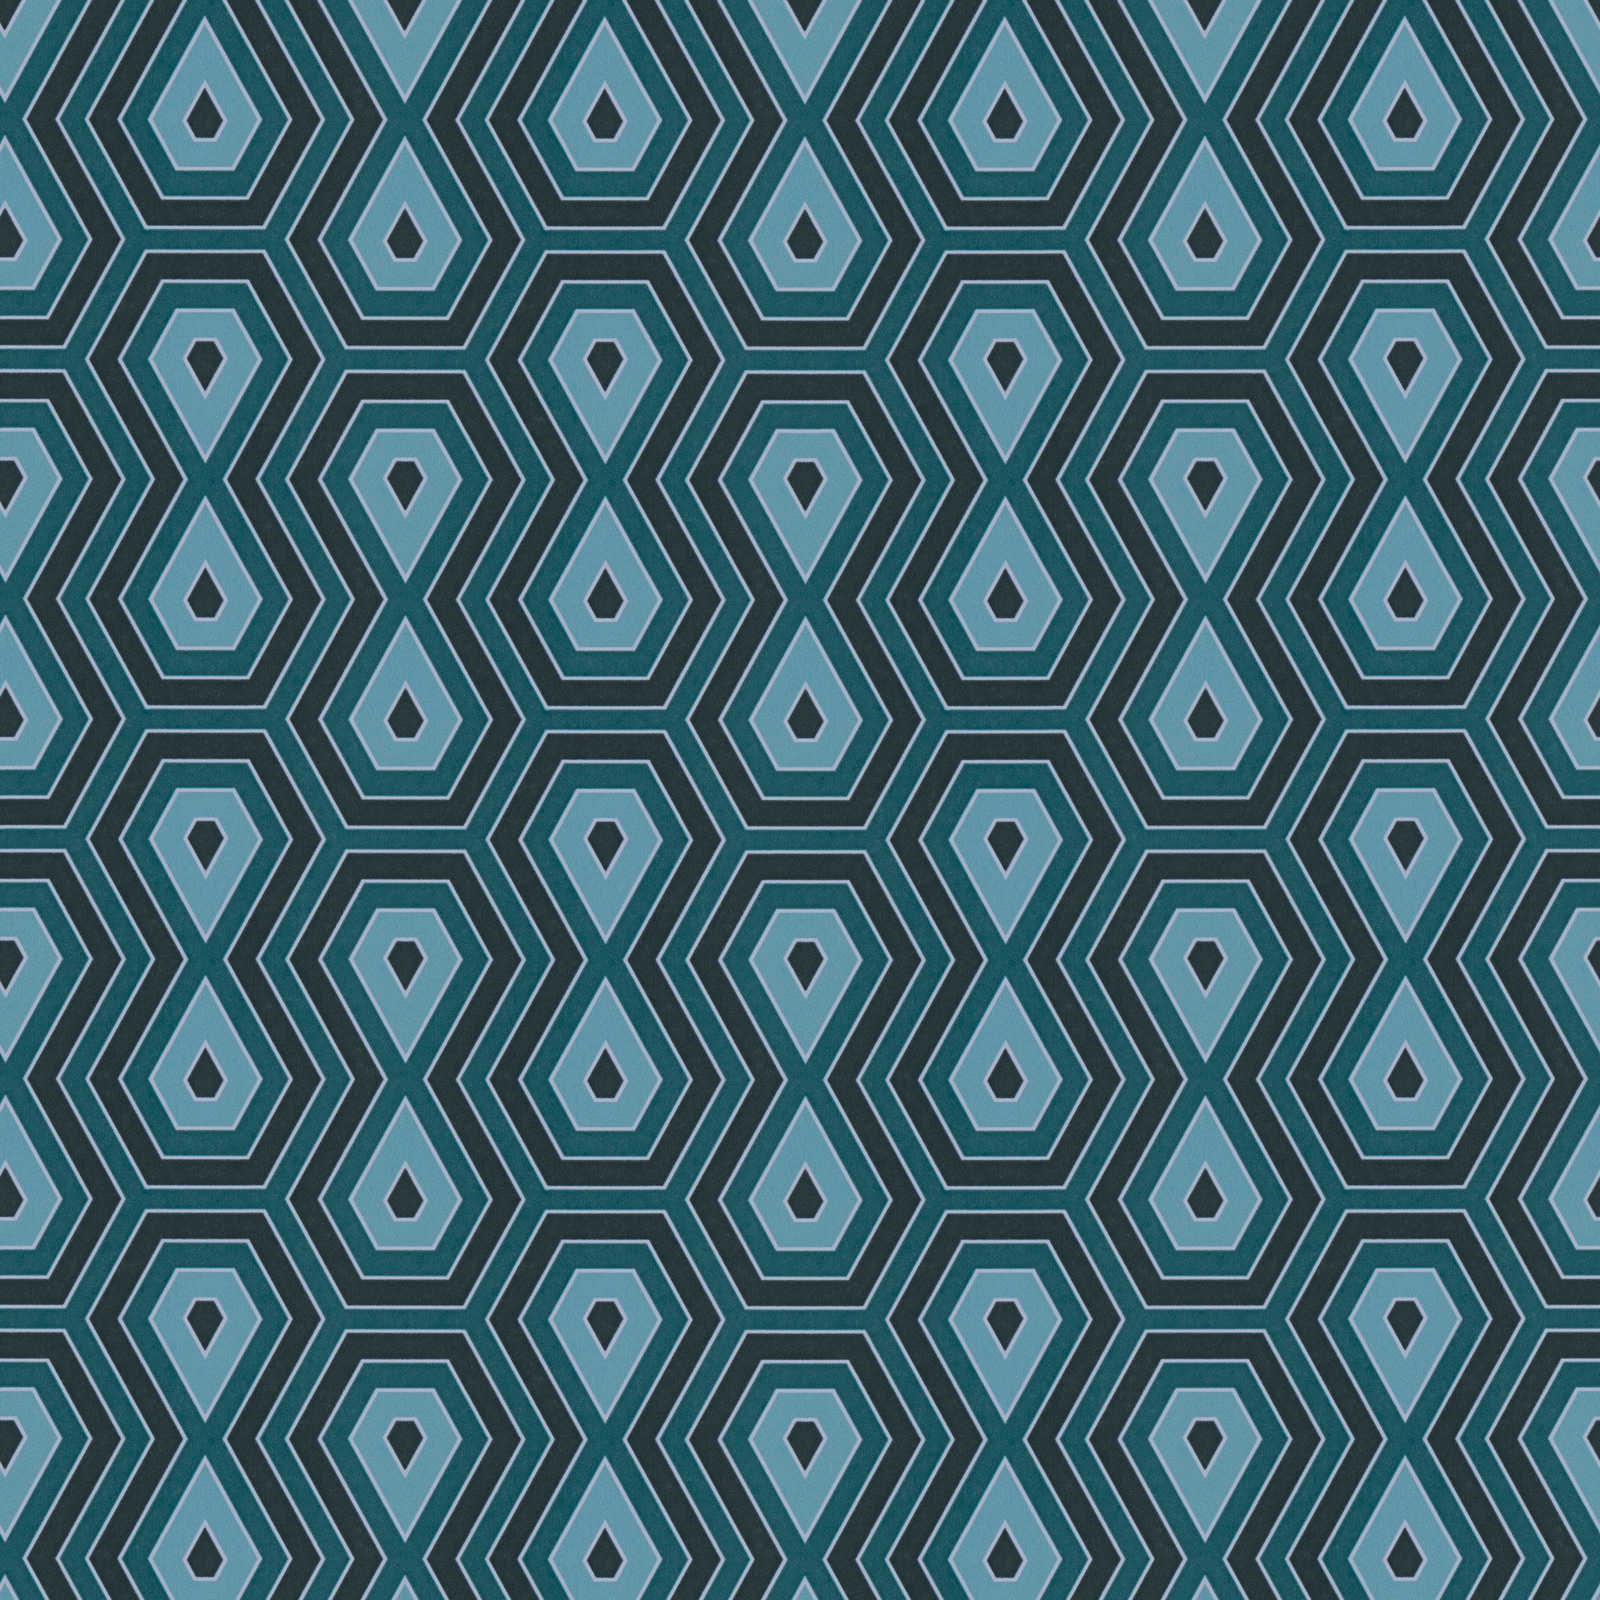         Tapete Türkis Grafik Diamant Muster im Retro Stil – Blau, Schwarz
    